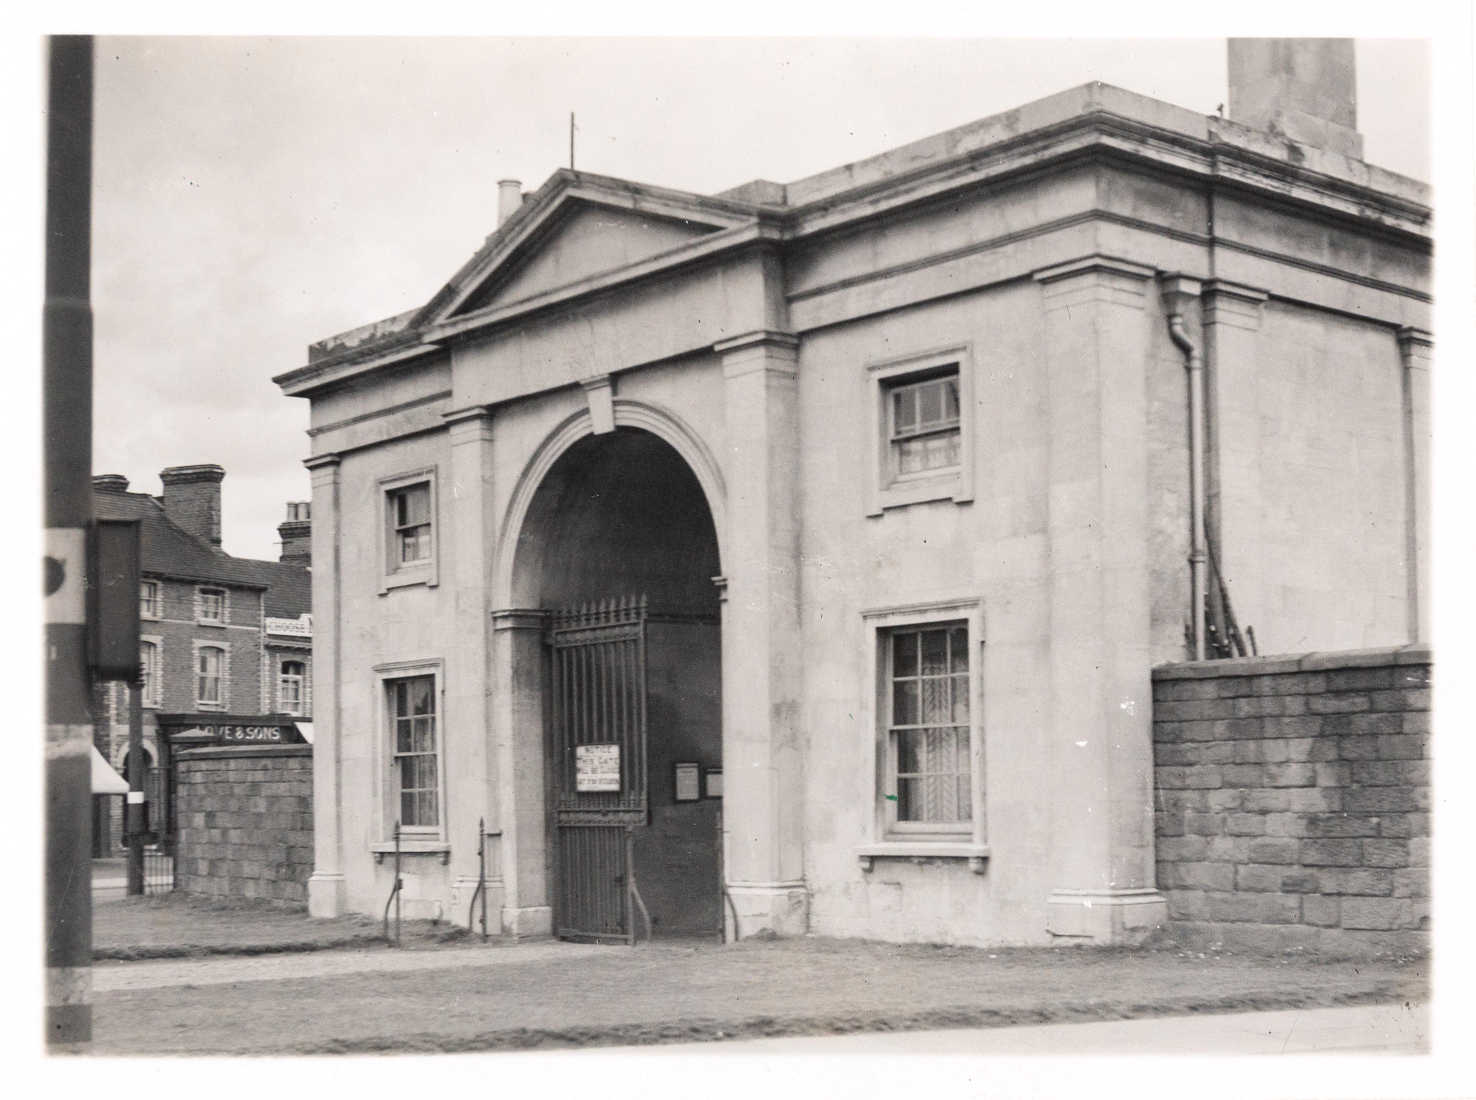 Greyscale photograph of gateway entrance.